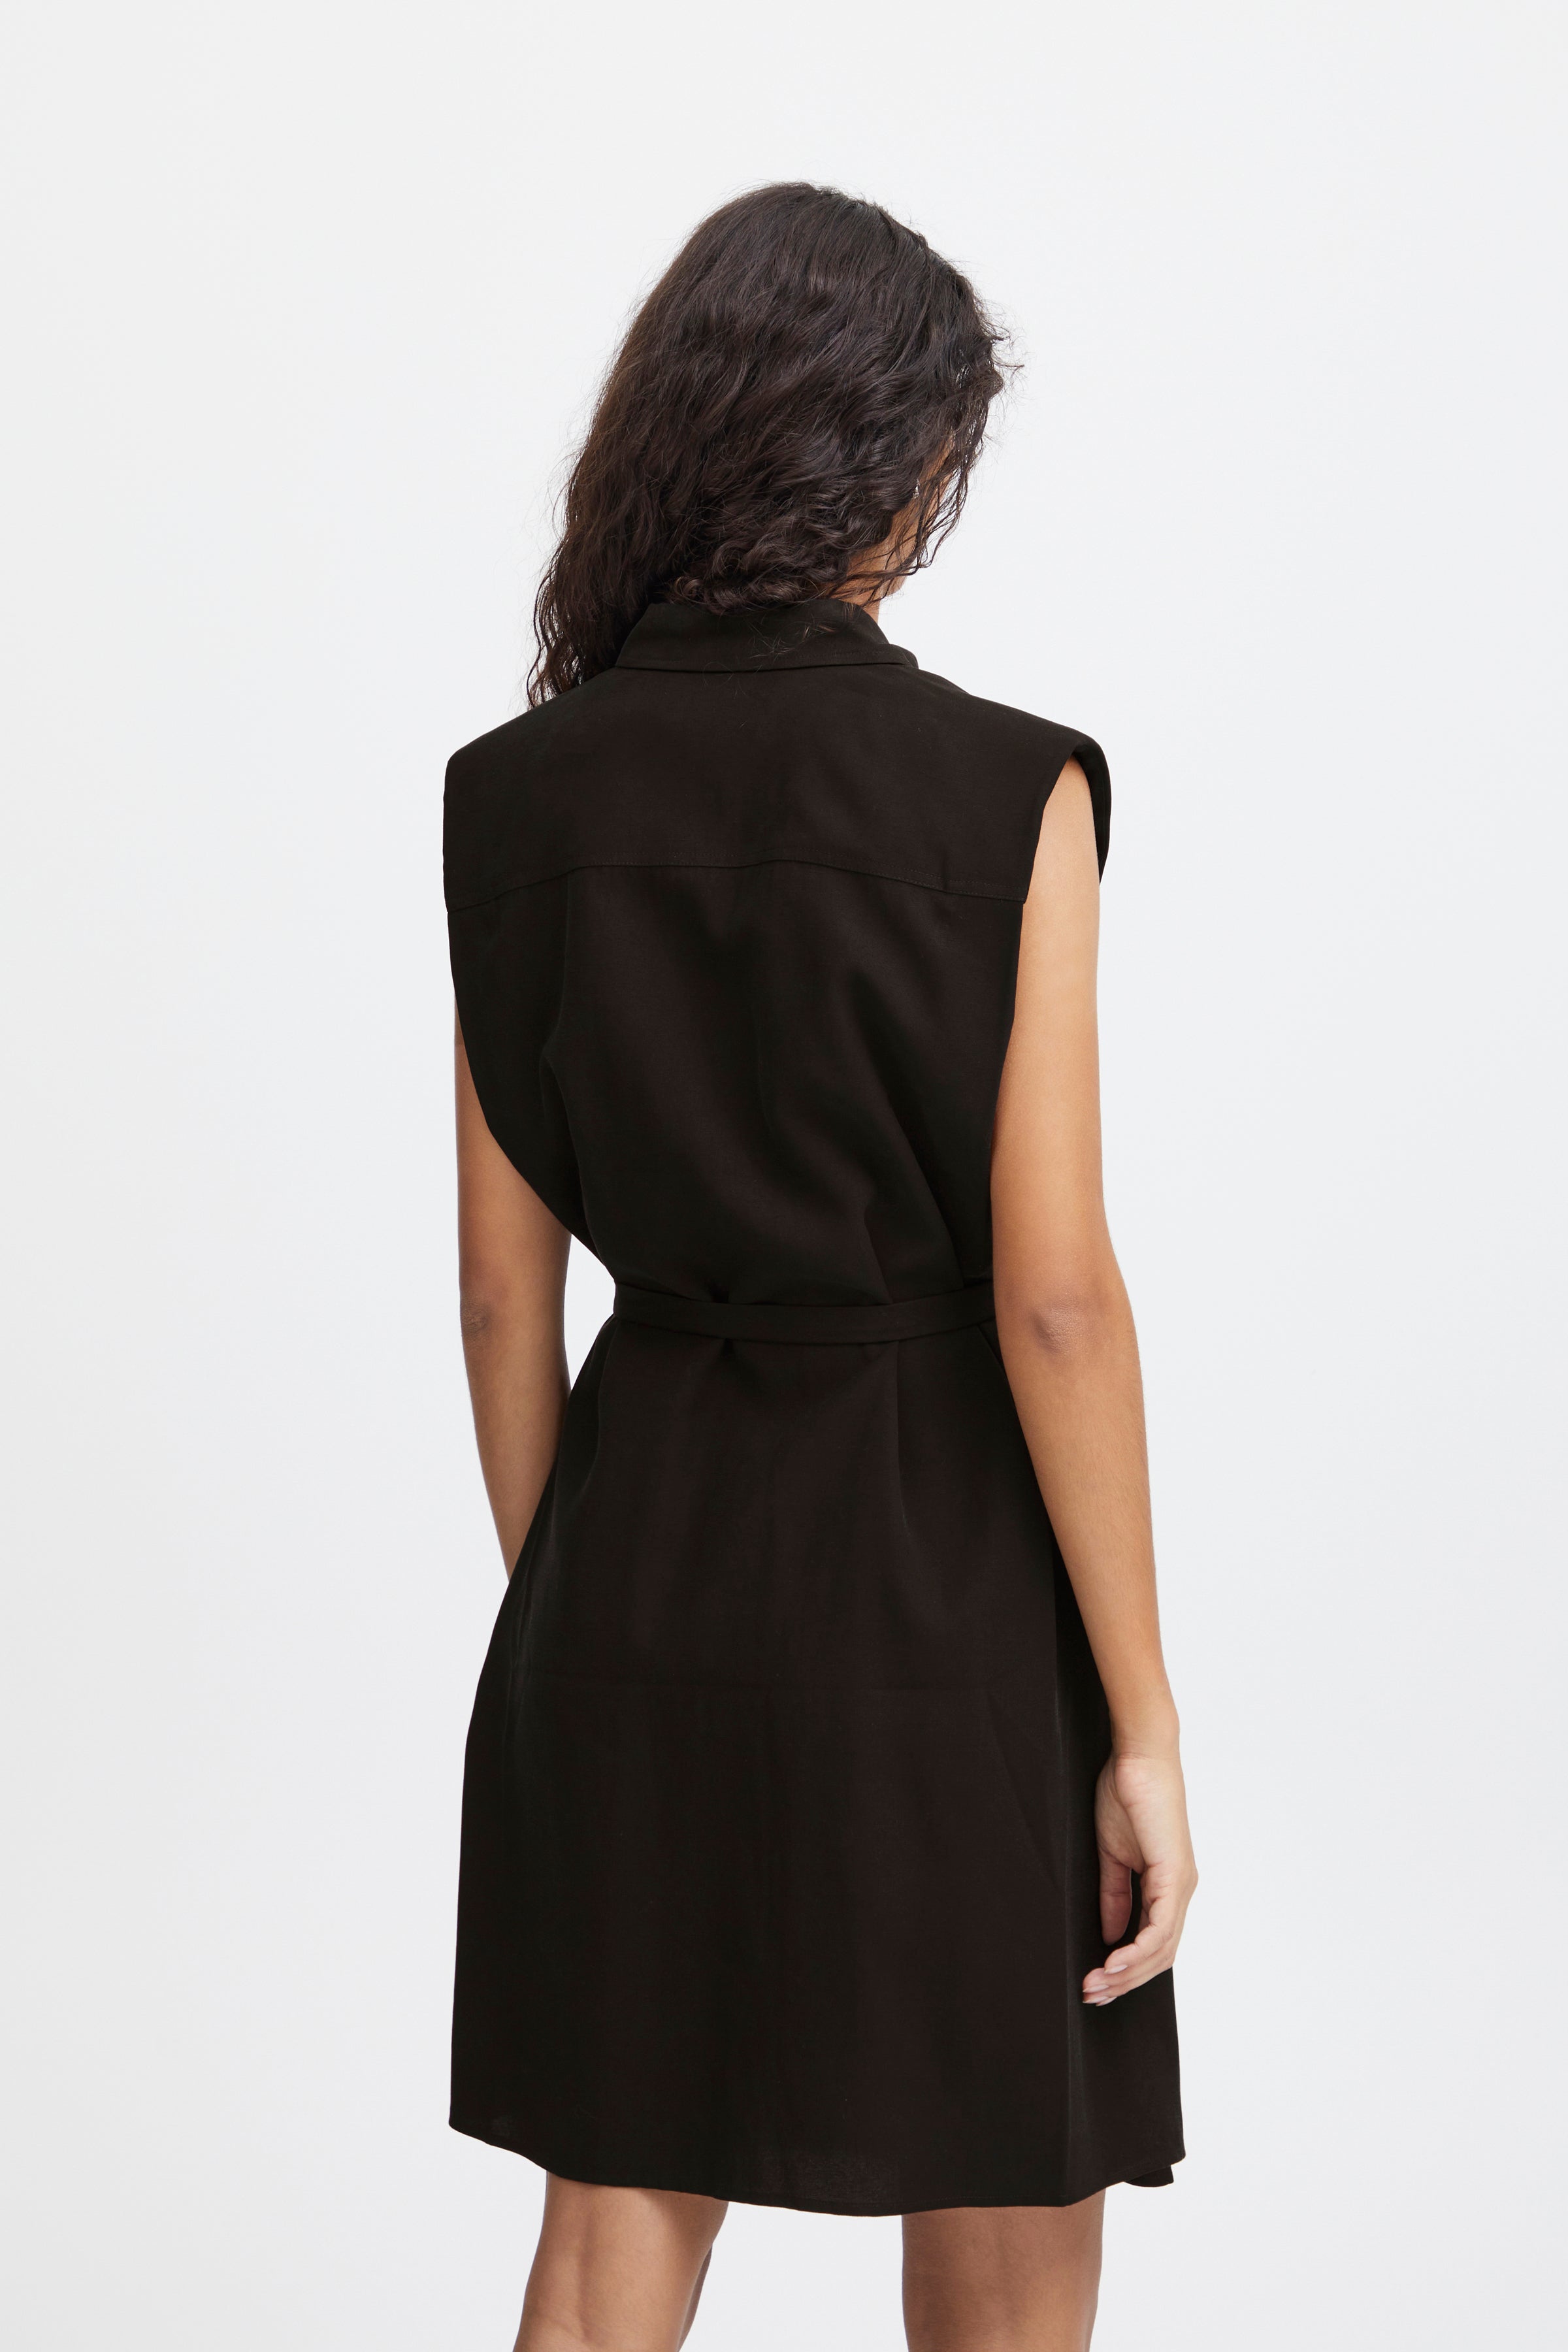 Hizta sleeveles dress, black